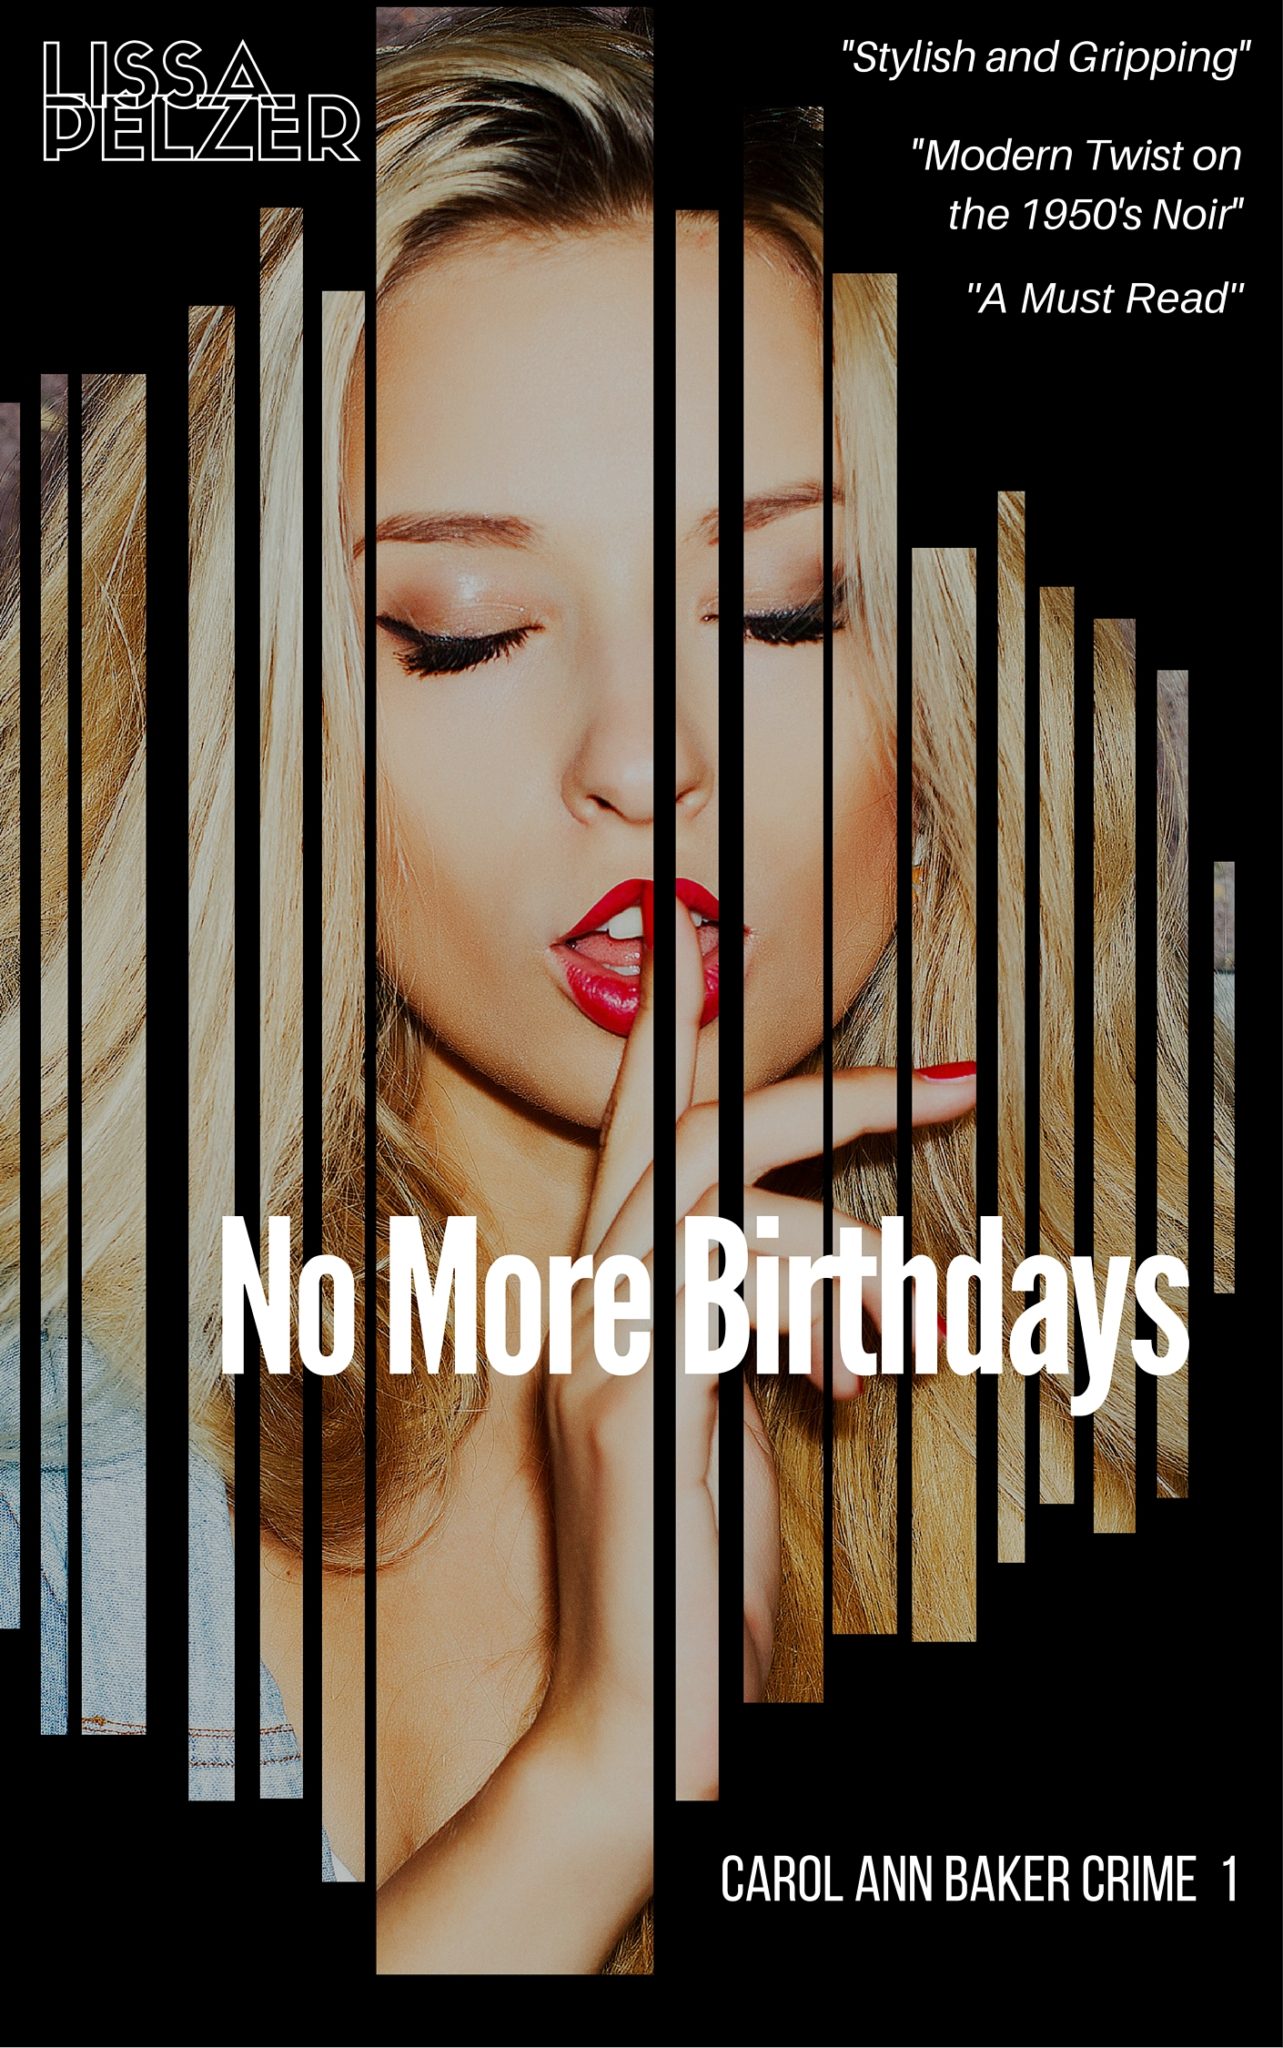 FREE: No More Birthdays by Lissa Pelzer